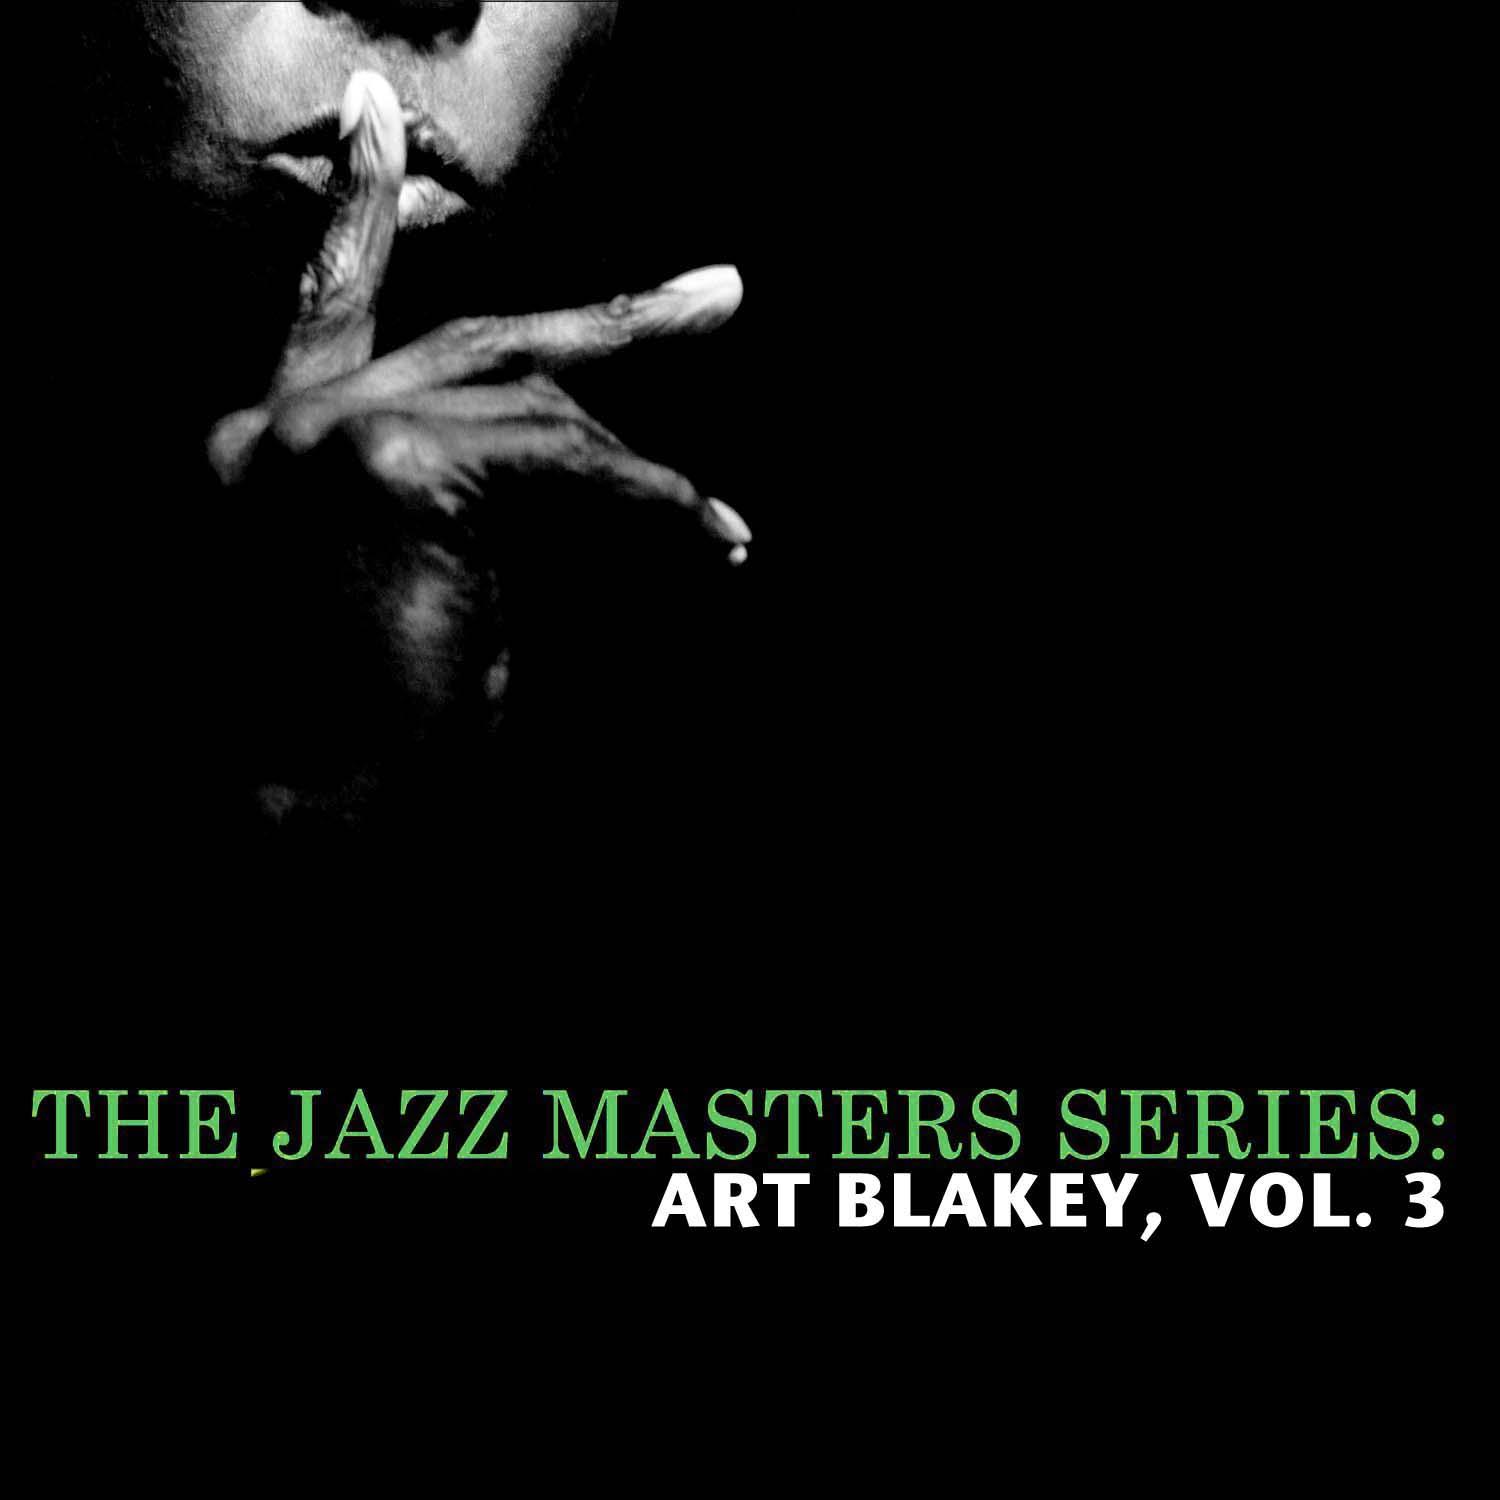 The Jazz Masters Series: Art Blakey, Vol. 3